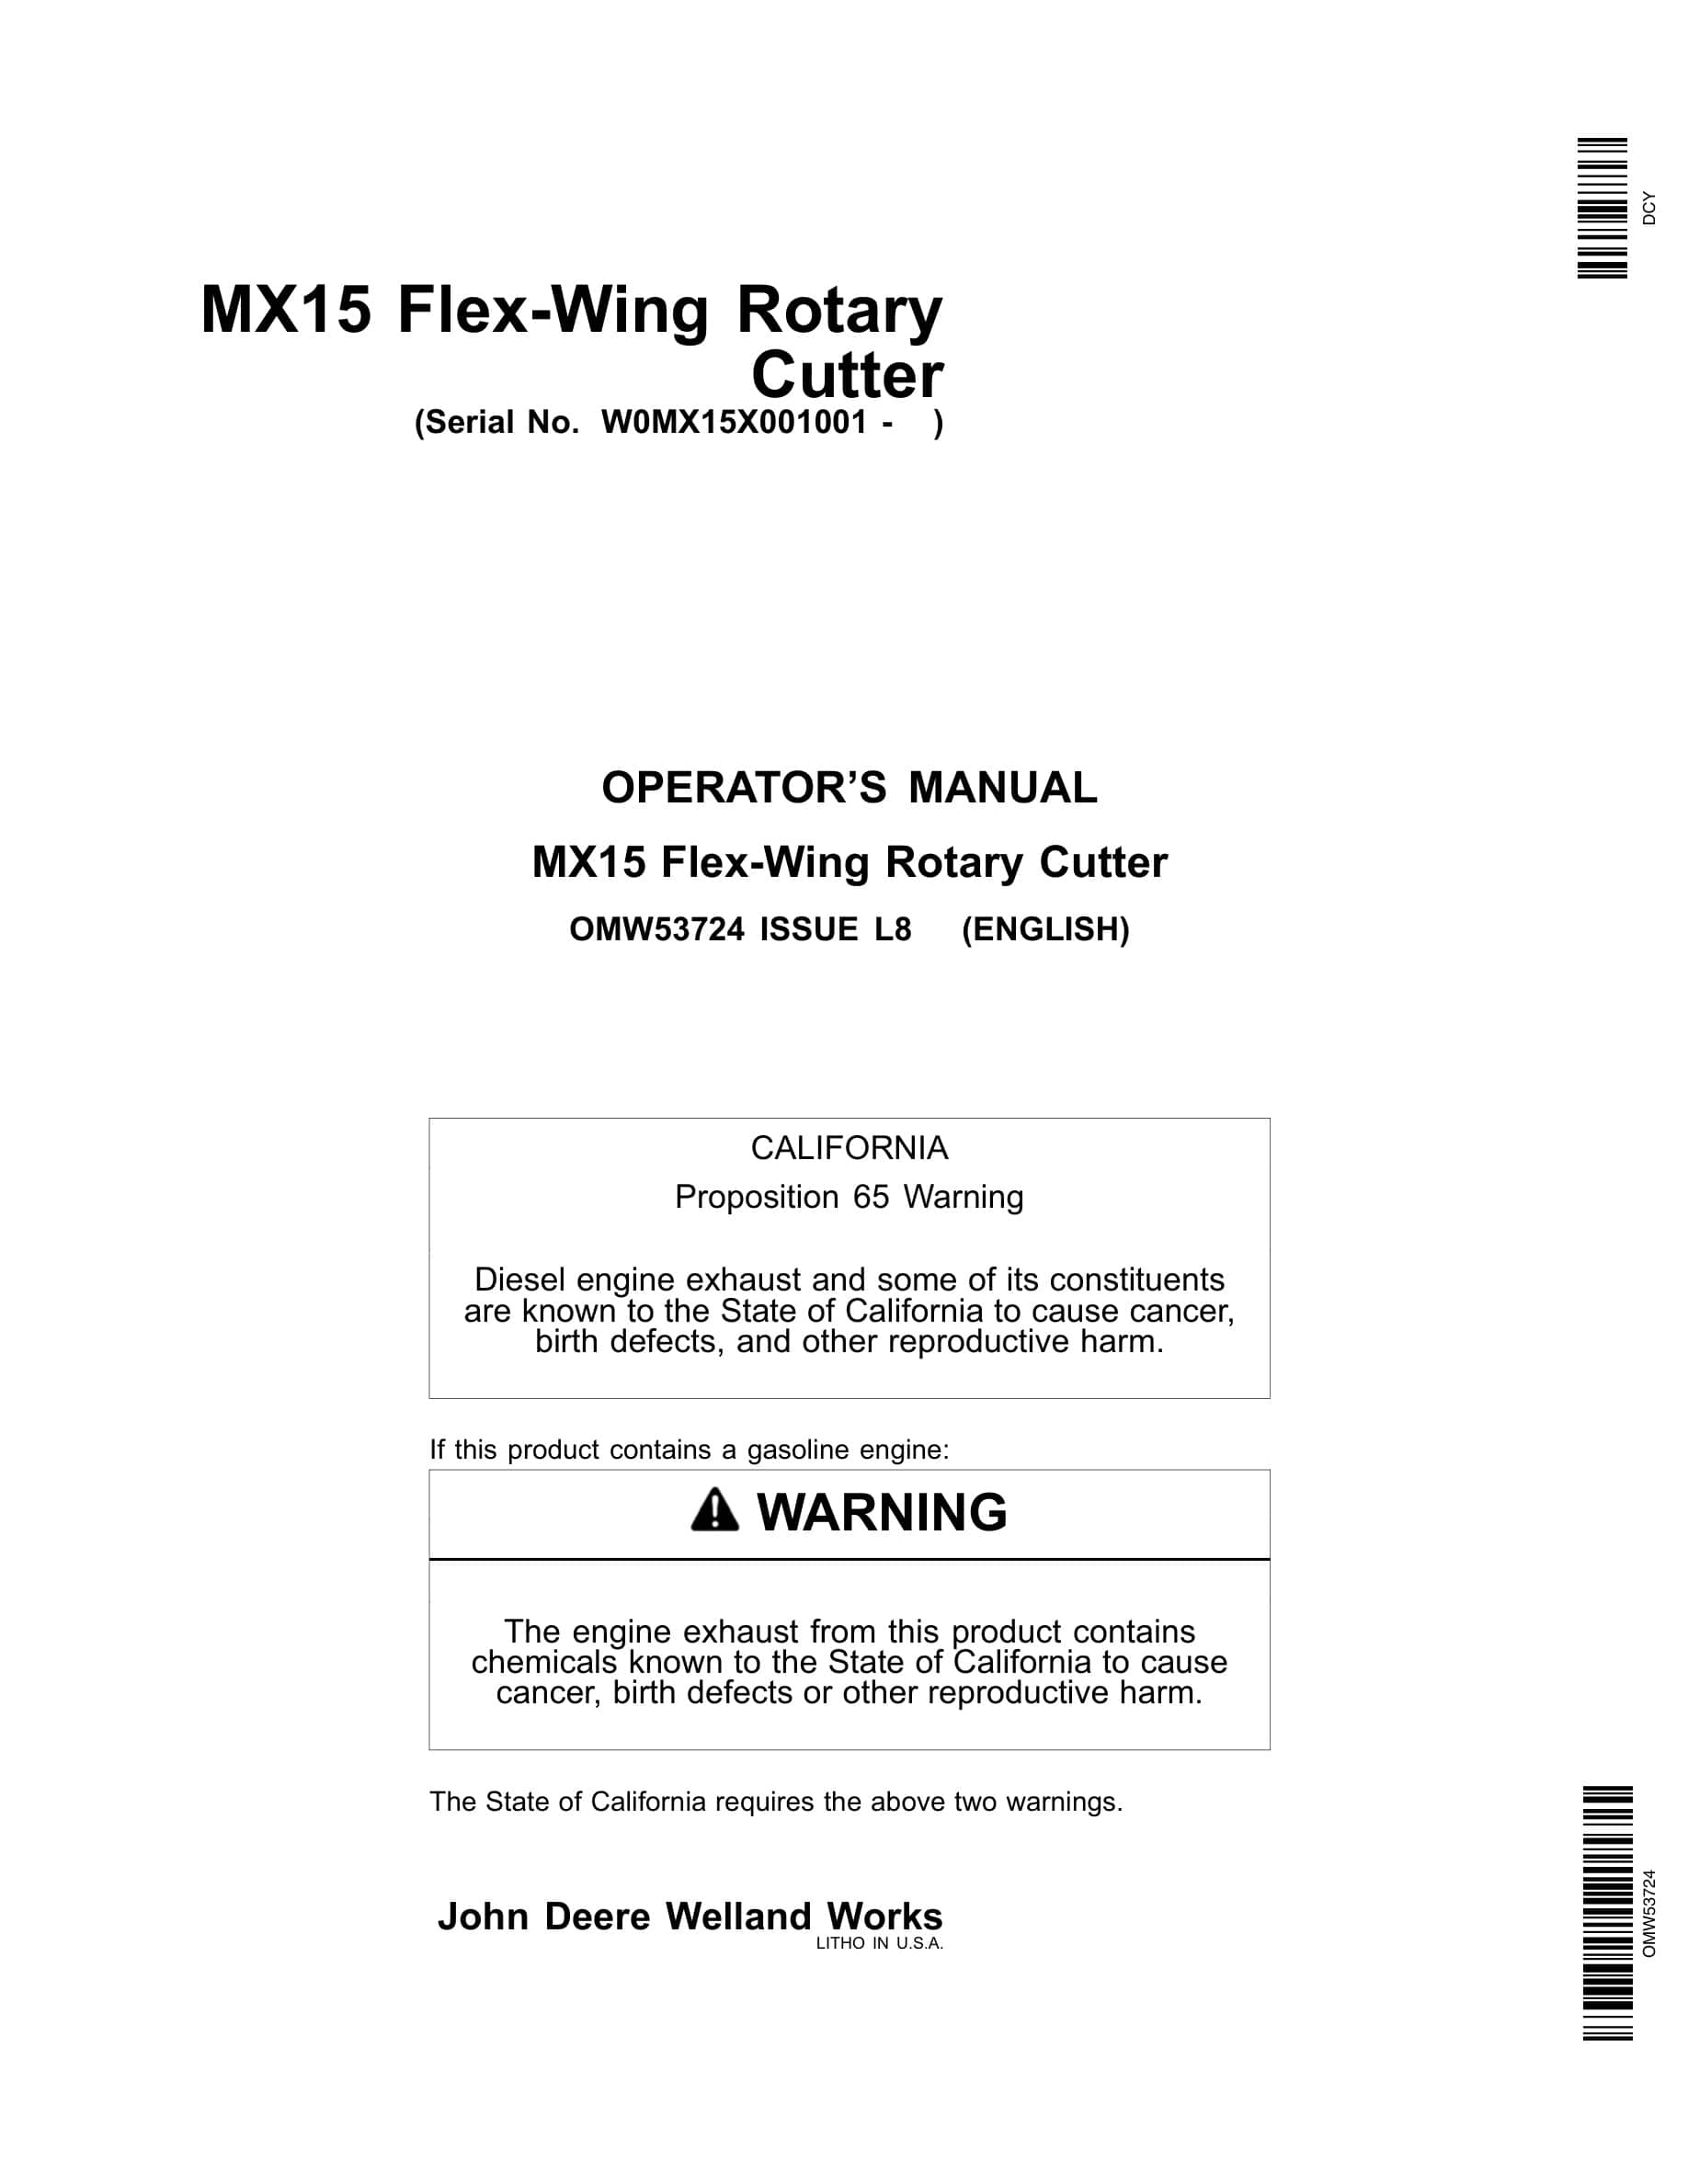 John Deere MX15 Flex-Wing Rotary Cutter Operator Manual OMW53724-1